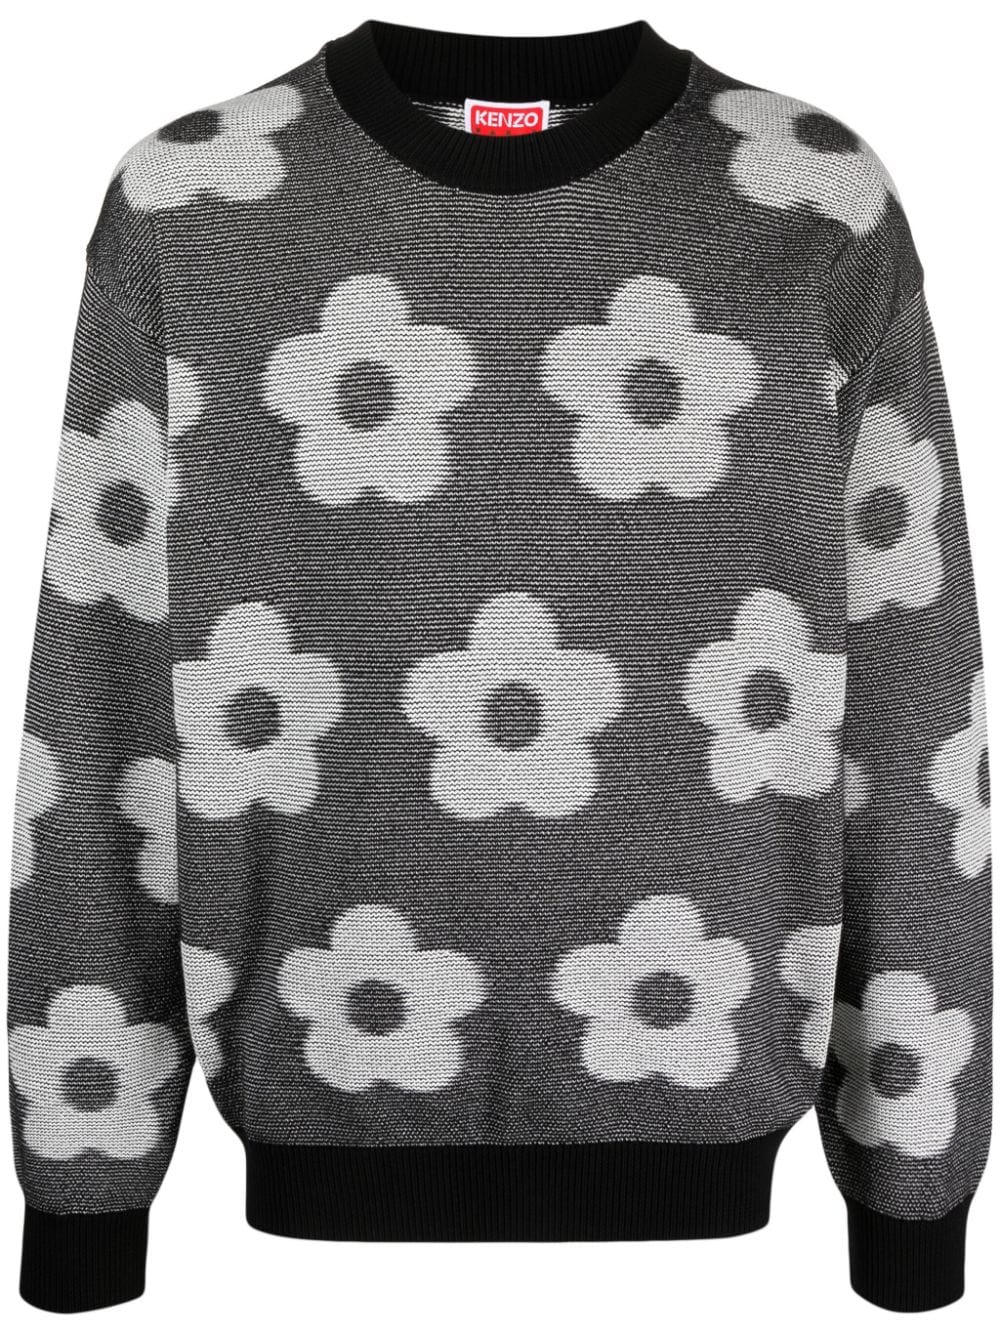 Kenzo floral-intarsia knit cotton jumper - Black von Kenzo